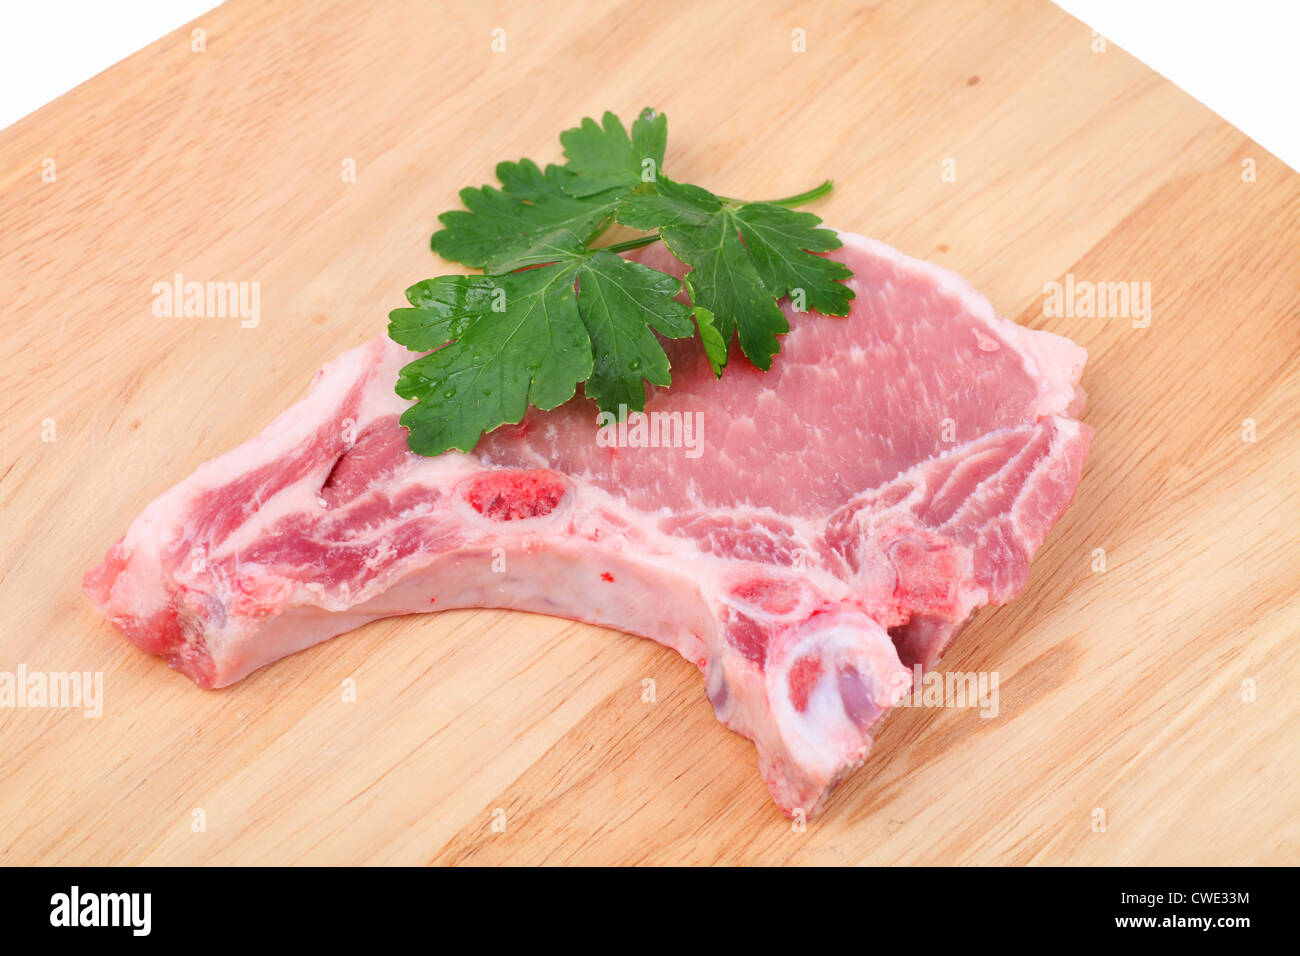 Pork chop and a leaf of parsley on a cutting board. Stock Photo